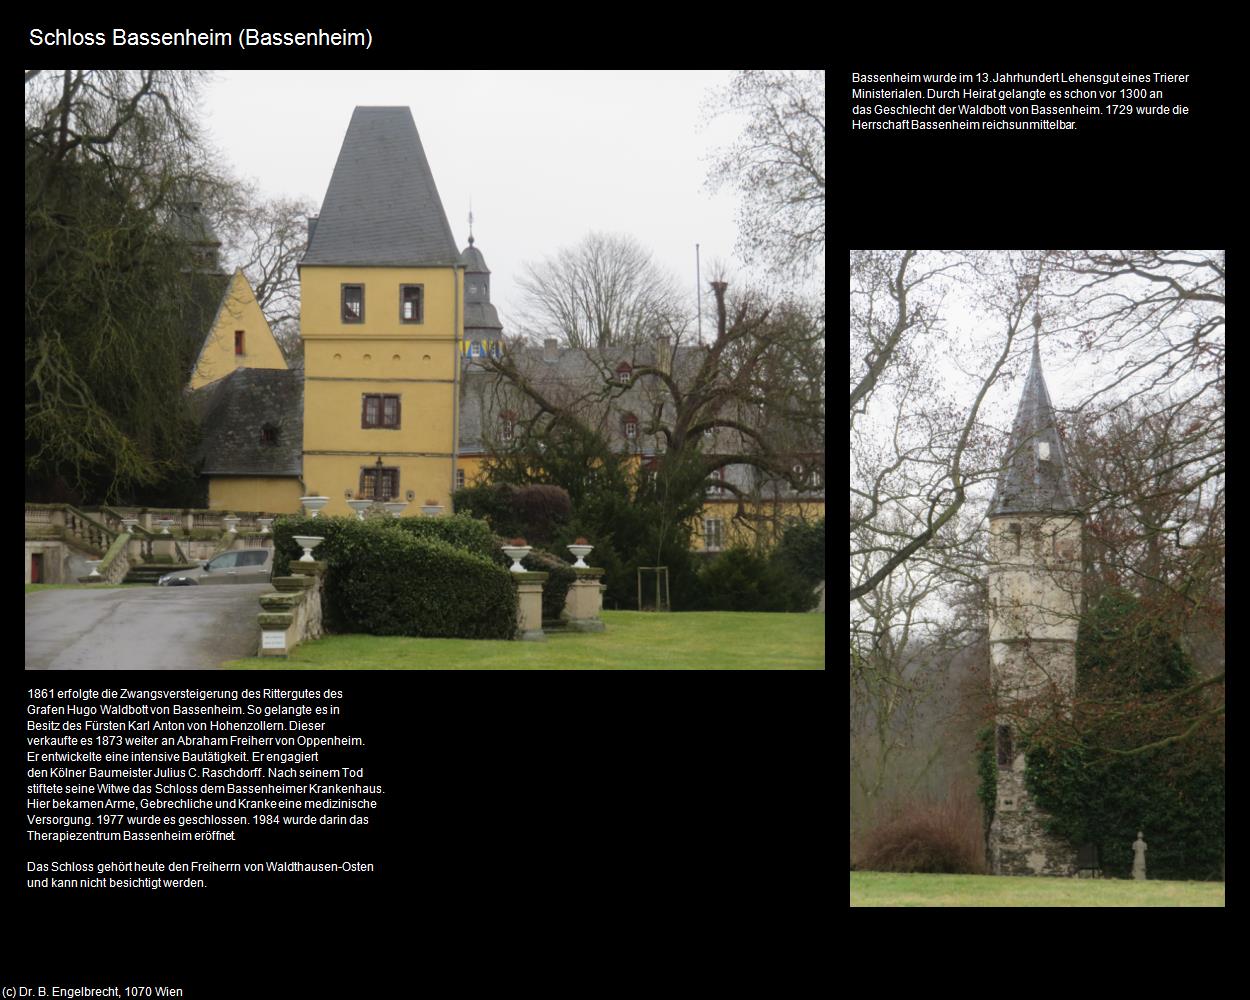 Schloss Bassenheim (Bassenheim (DEU-RP)) in RHEINLAND-PFALZ und SAARLAND